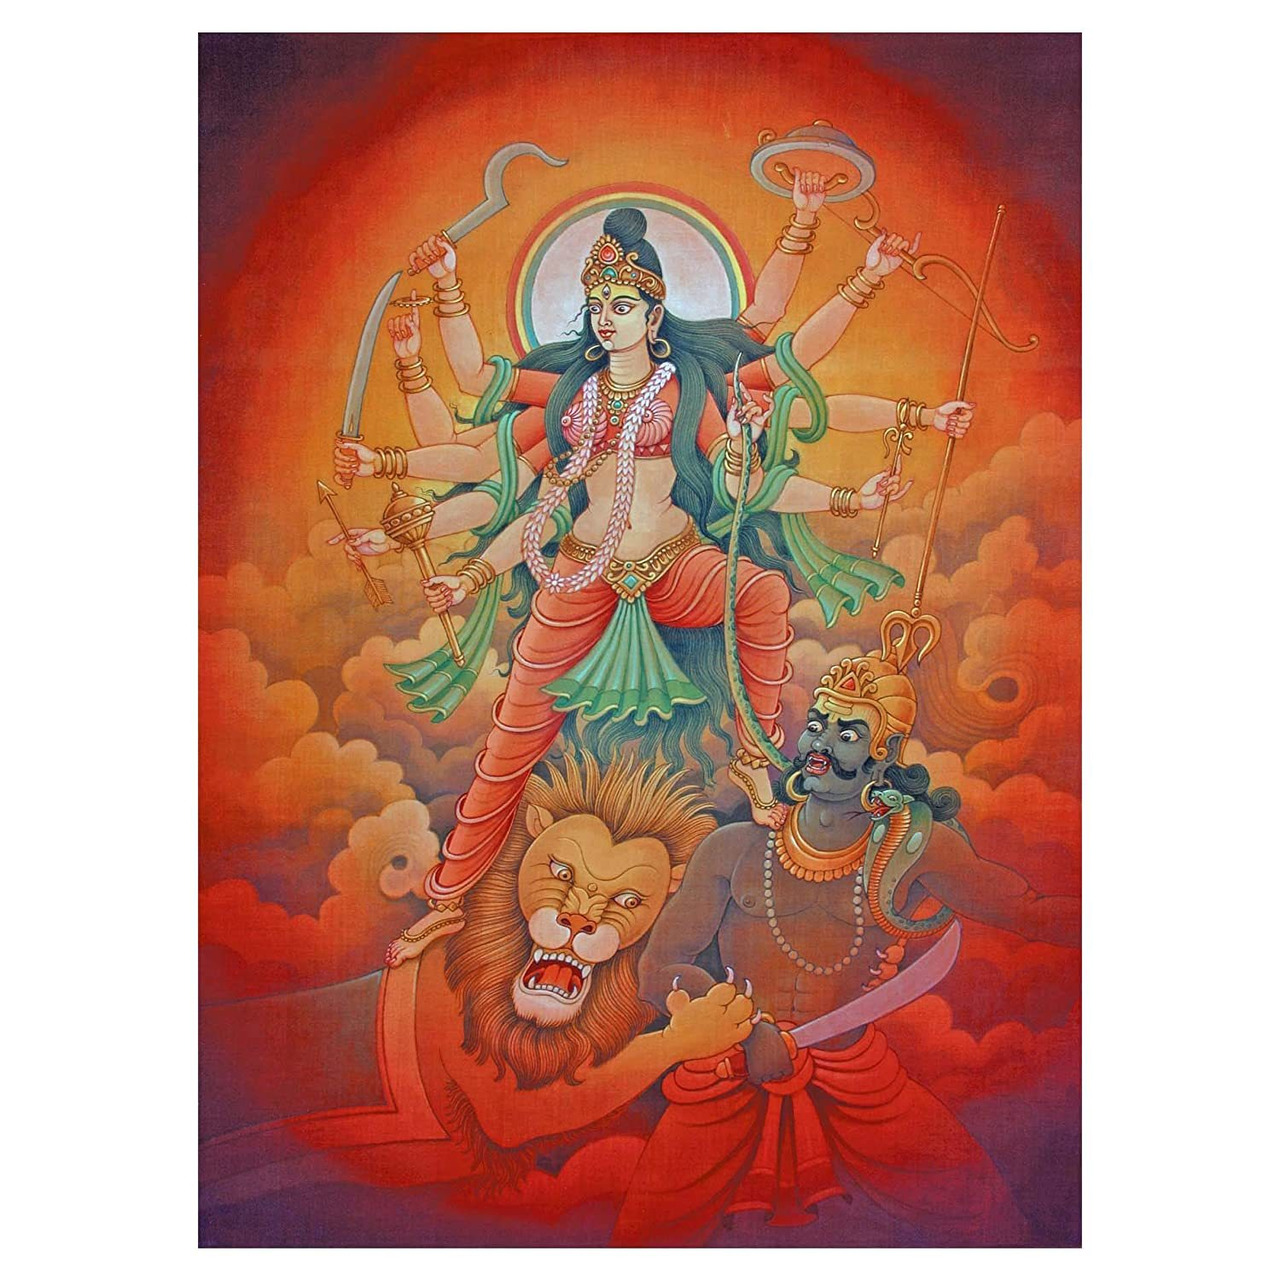 About Maa Rati Devi: Hindu Goddess Of Sexuality